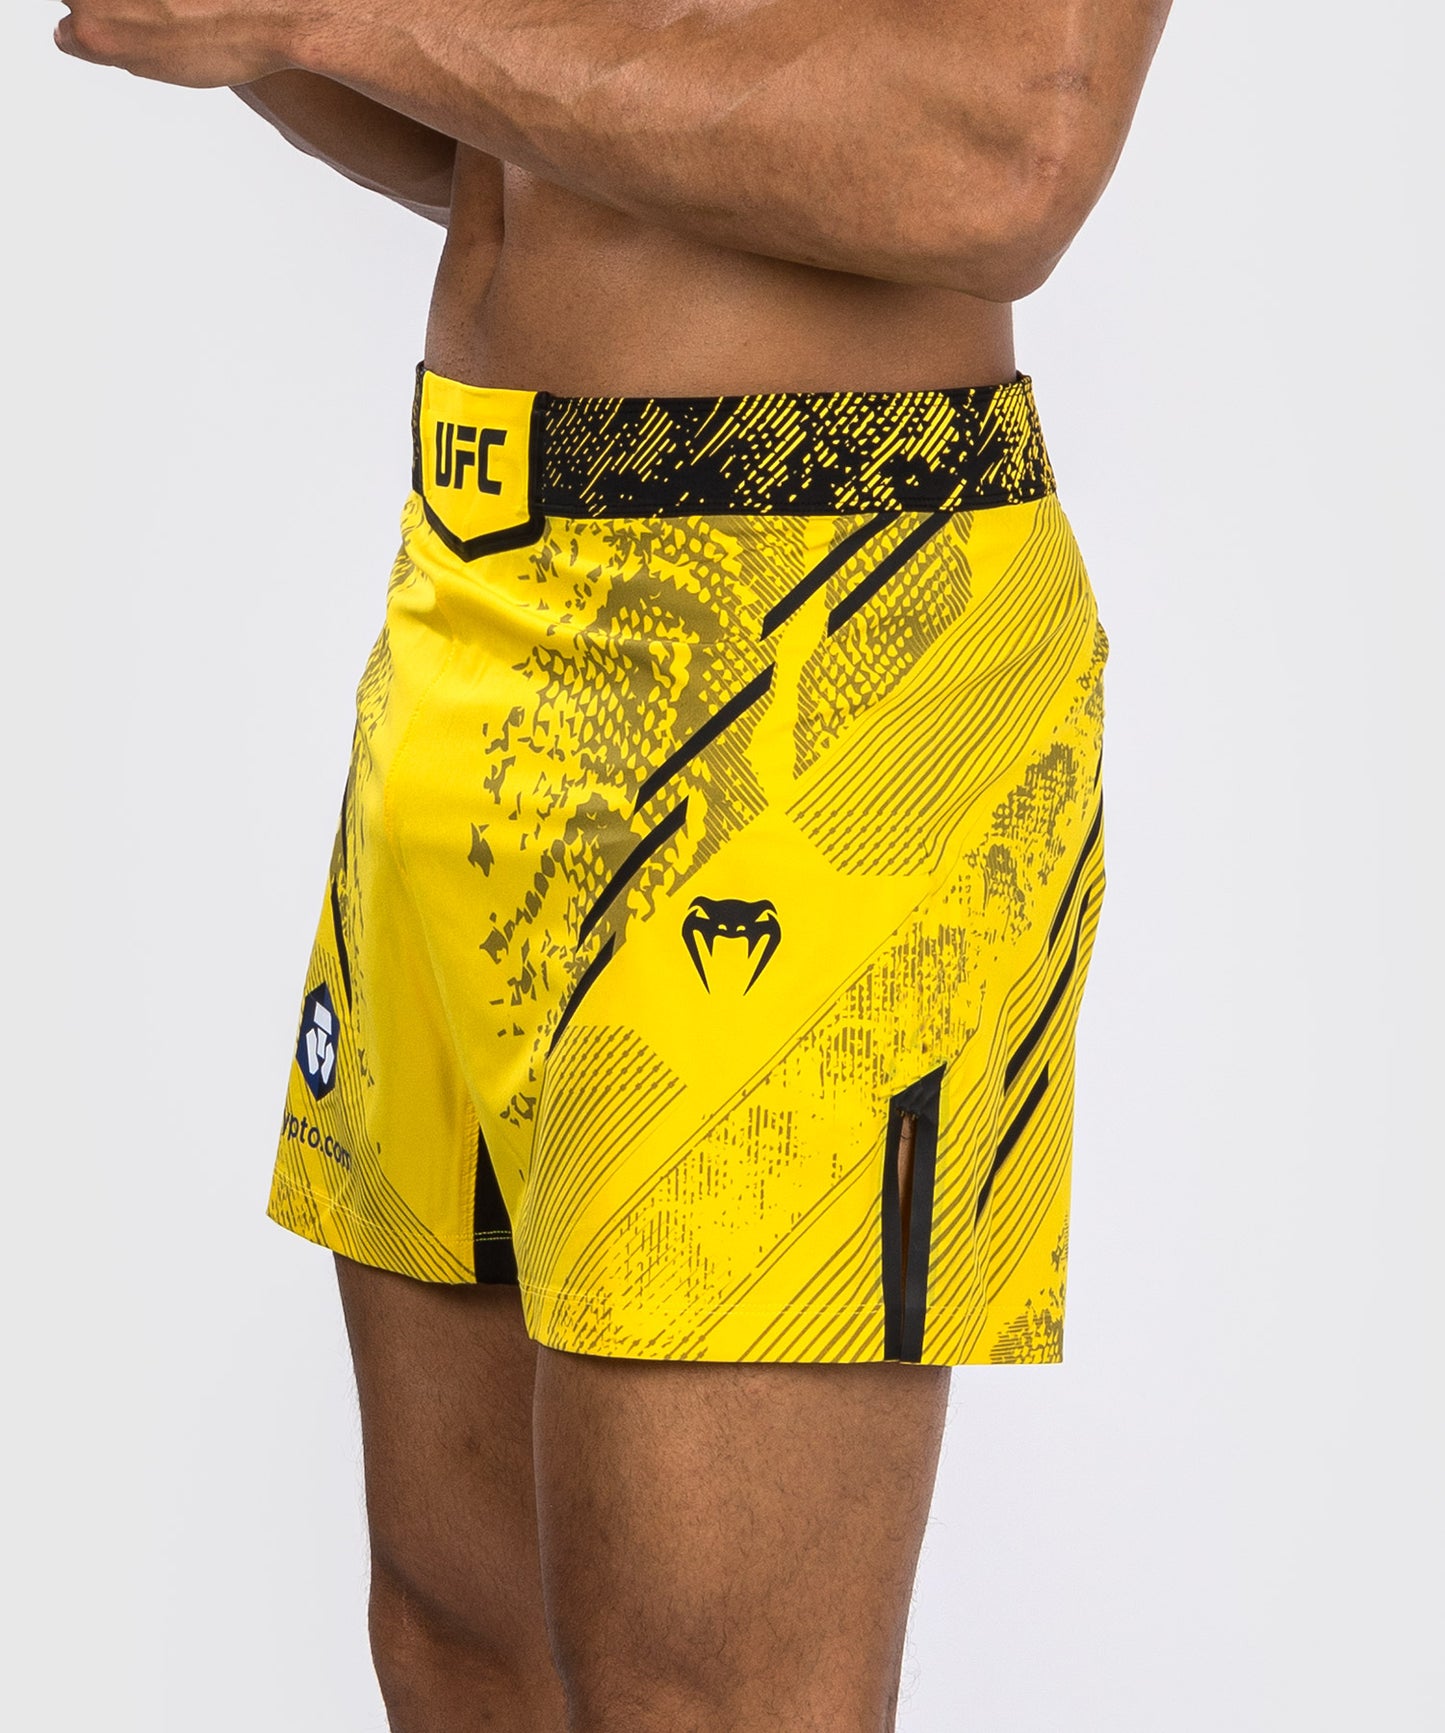 UFC Adrenaline by Venum Authentic Fight Night Men's Fight Short - Short Fit - Yellow